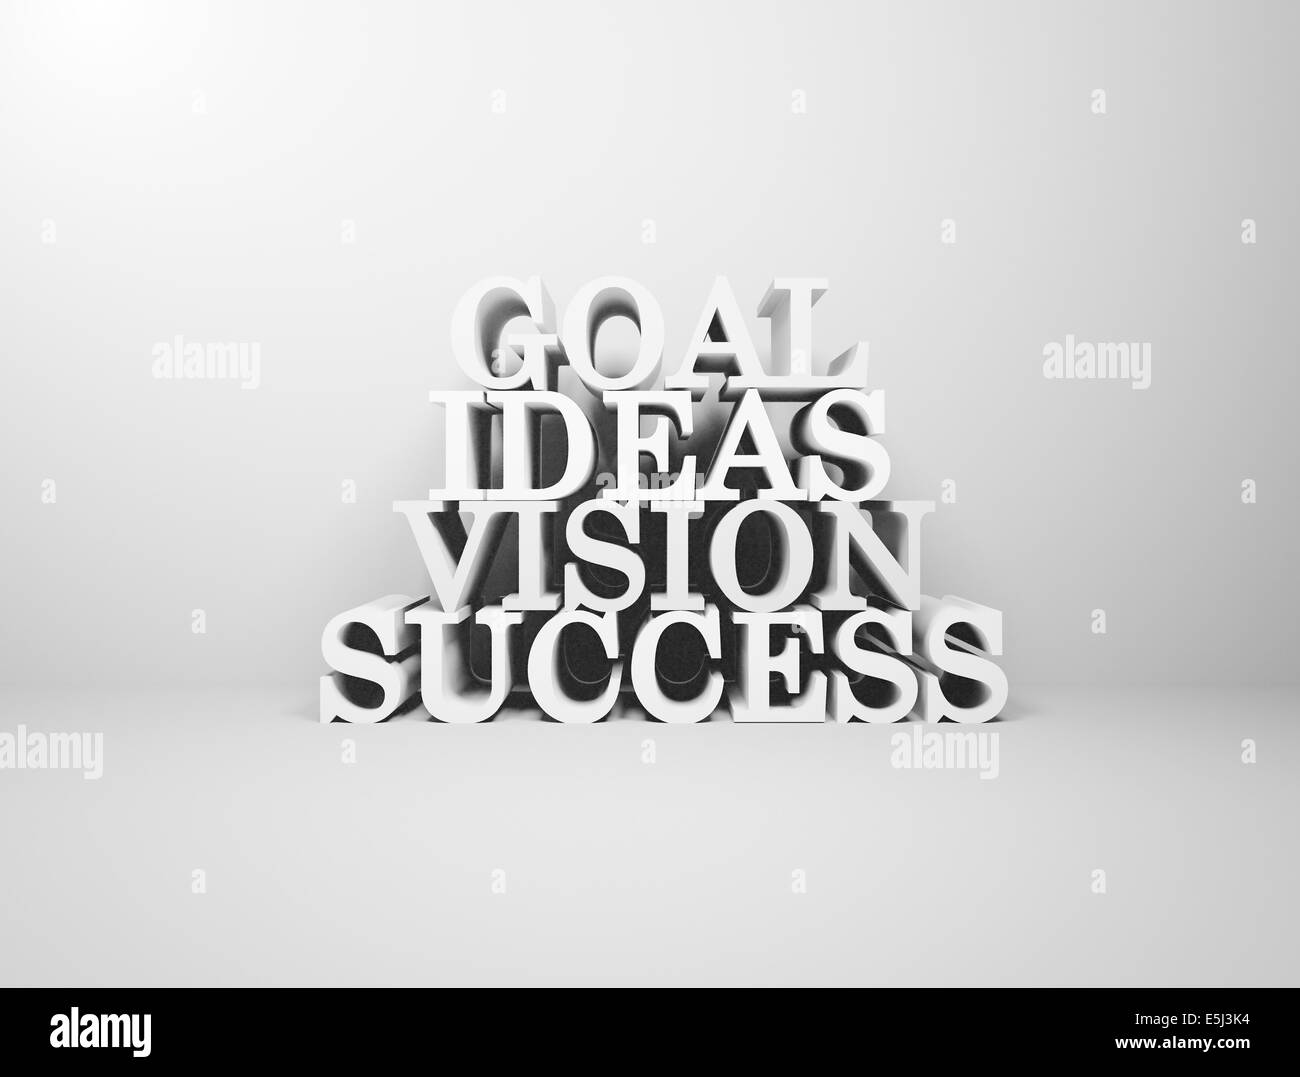 Goal, Ideas, Vision, Success 3D text background Stock Photo